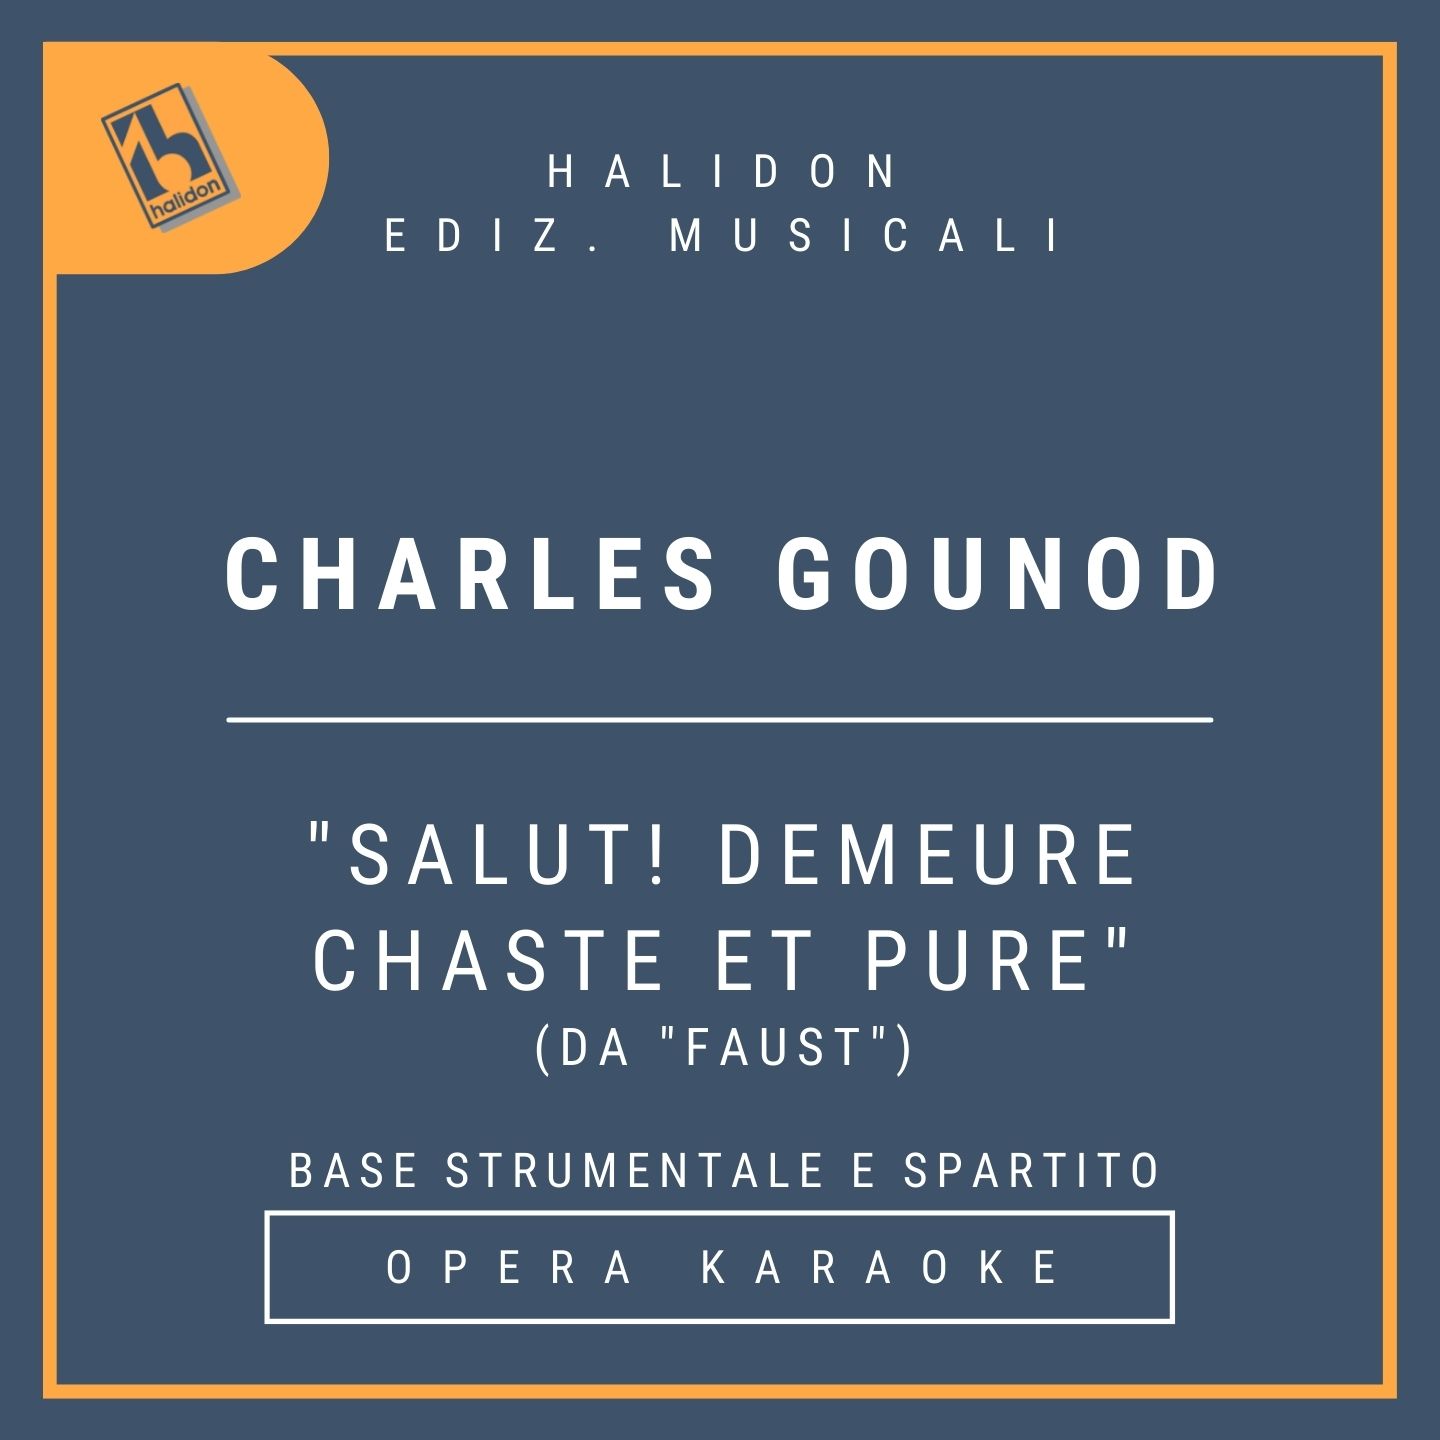 Charles Gounod - Salut! Demeure chaste et pure (from 'Faust') - Faust Cavatina (tenor - A flat) - Instrumental track + sheet